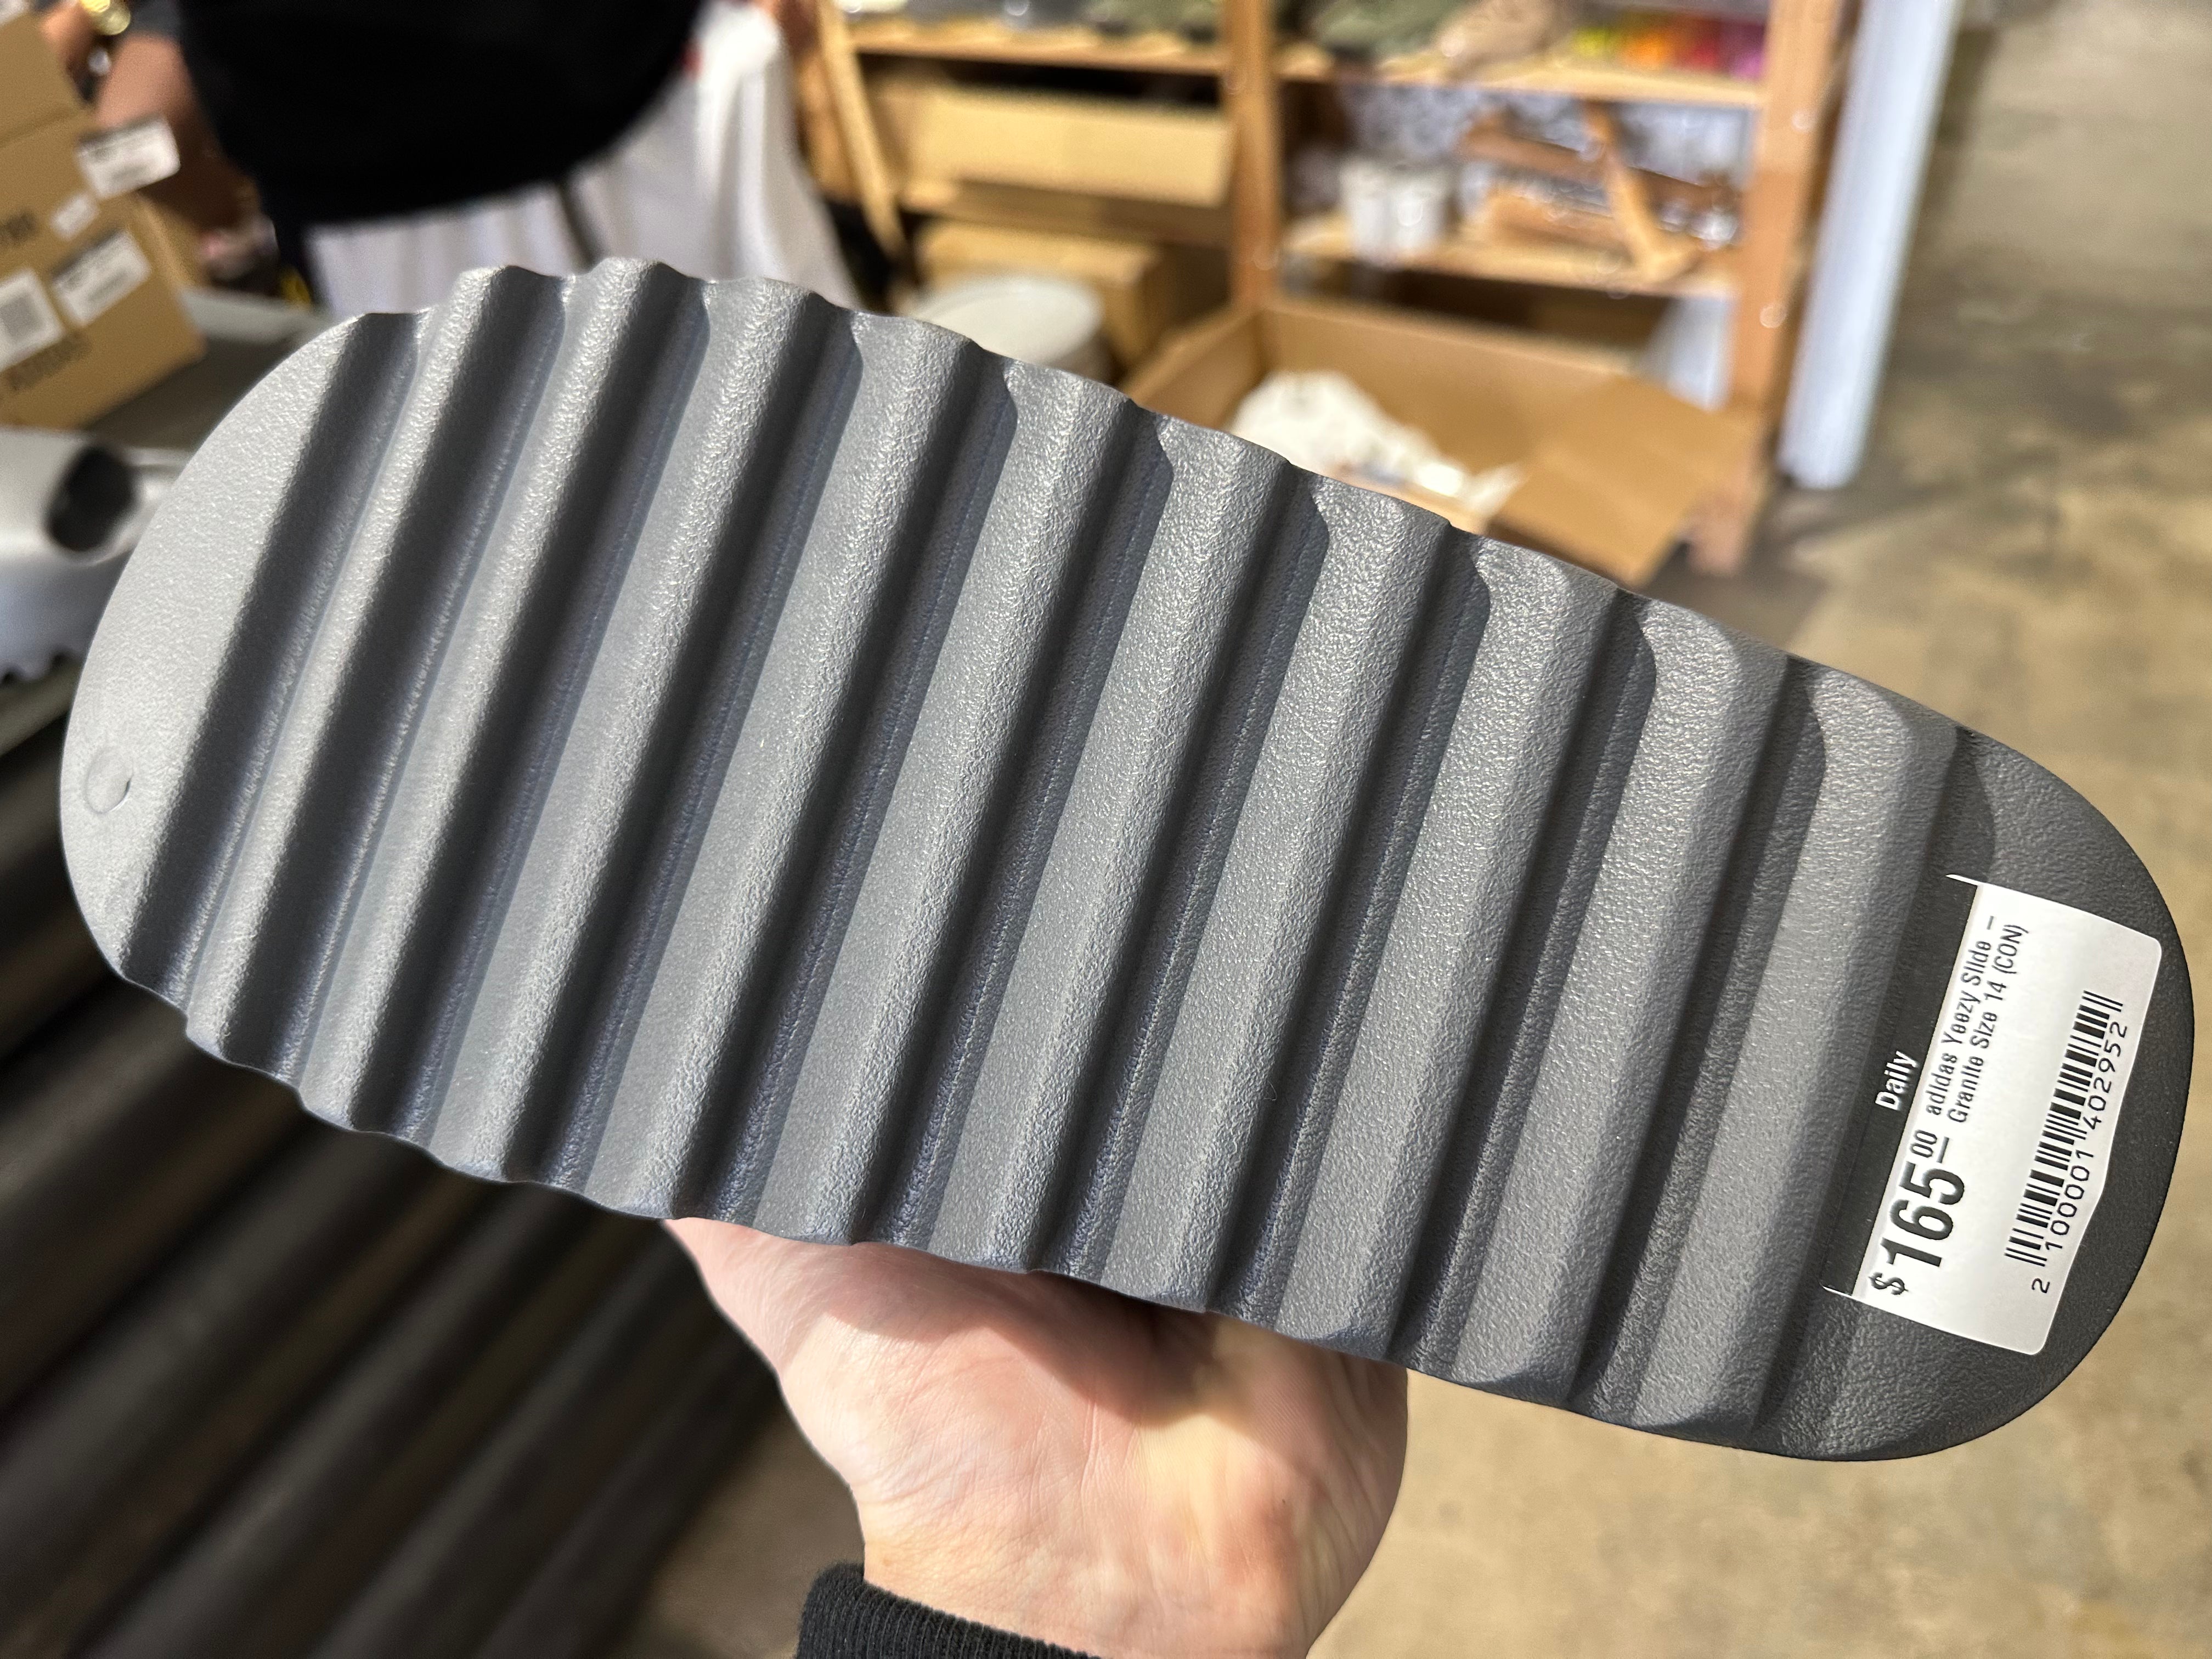 adidas Yeezy Slide - Granite